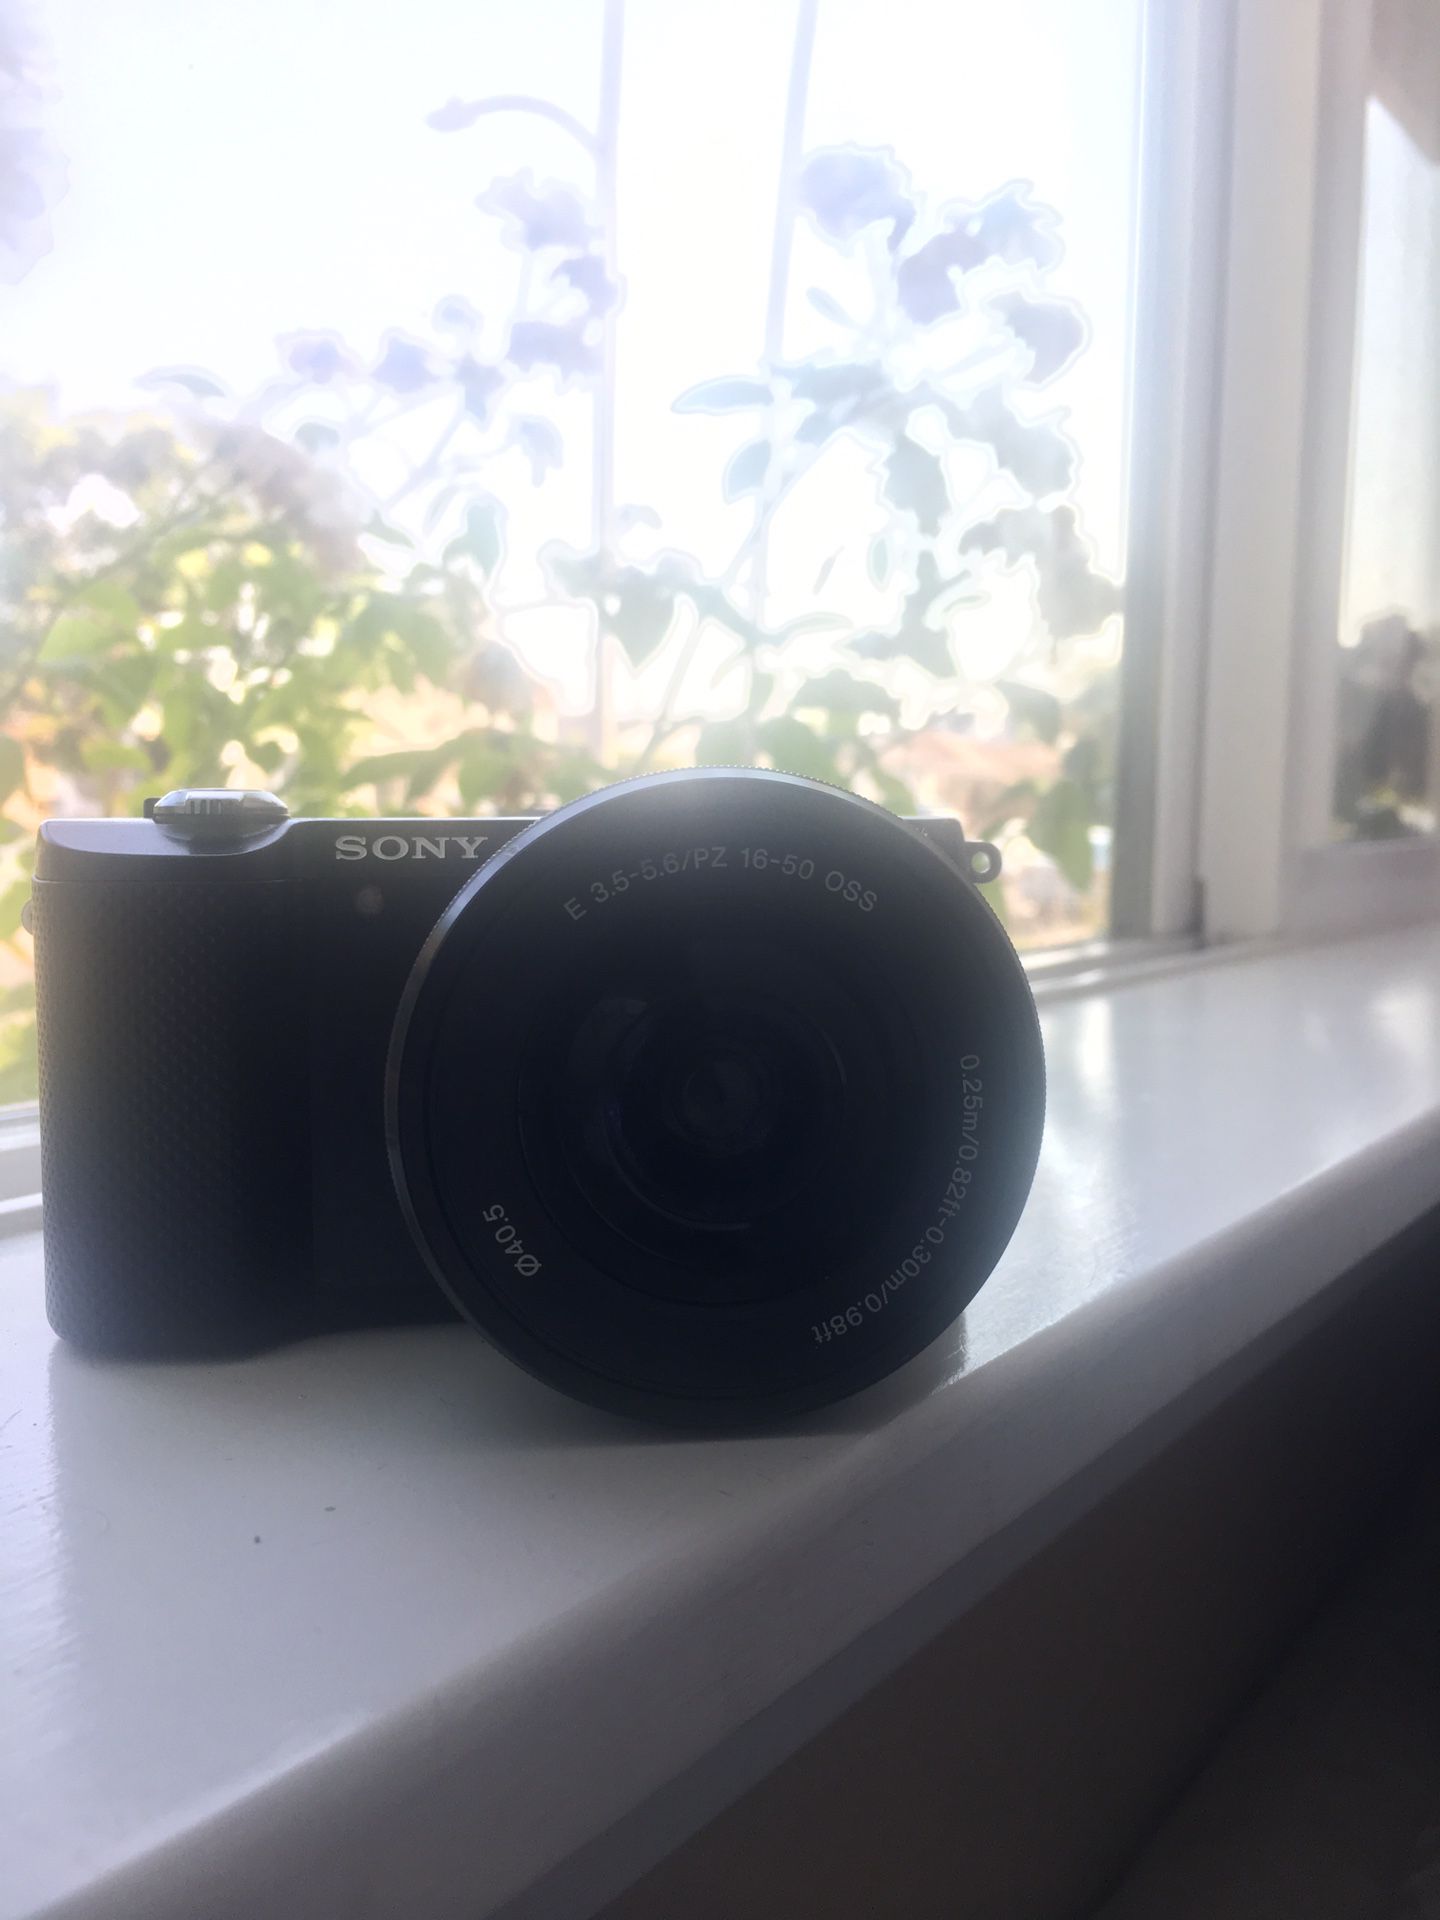 Sony 20.1 megapixel camera